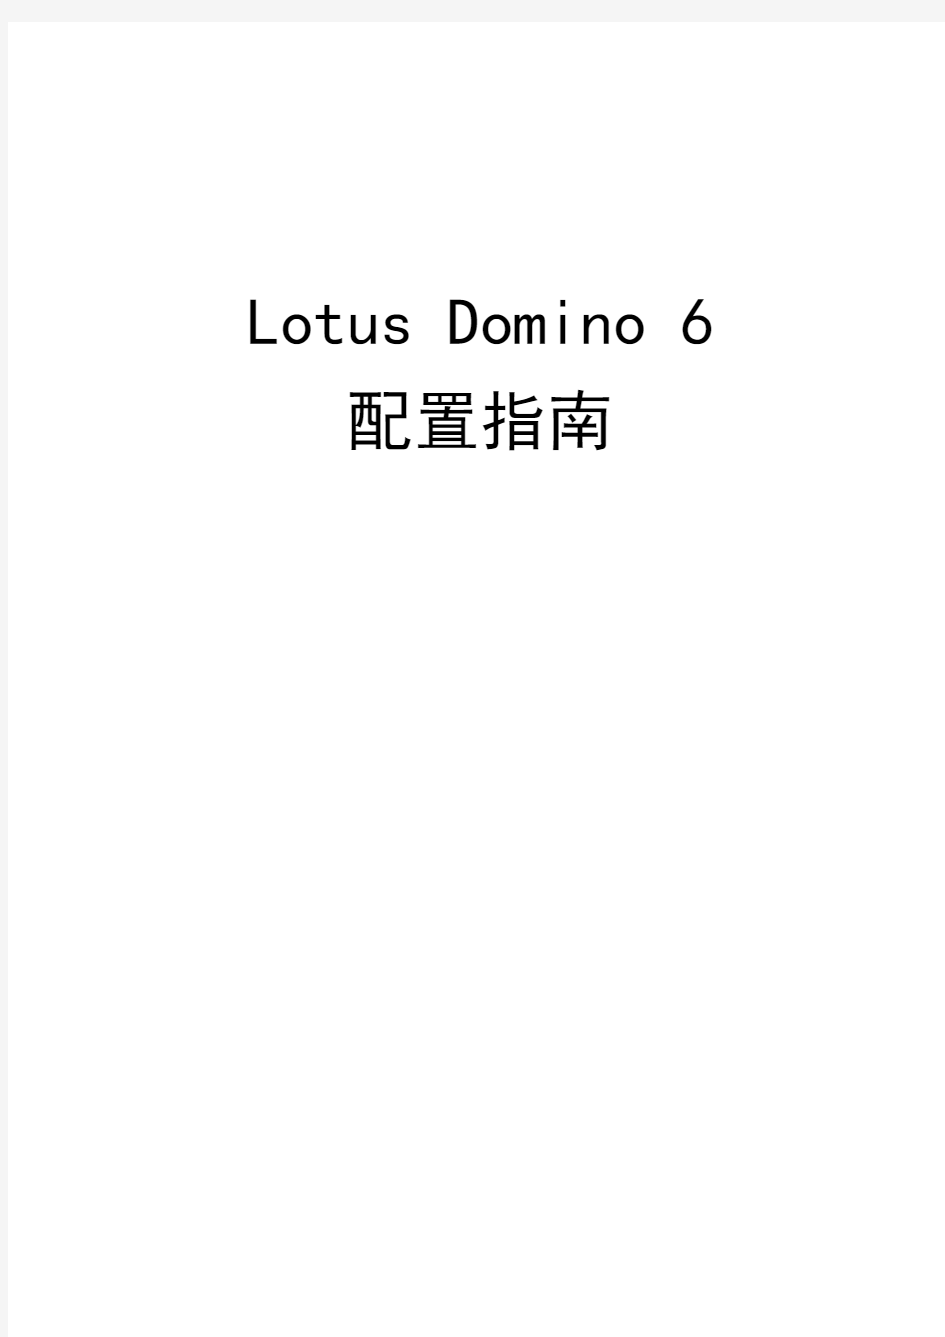 Lotus Domino 6配置指南